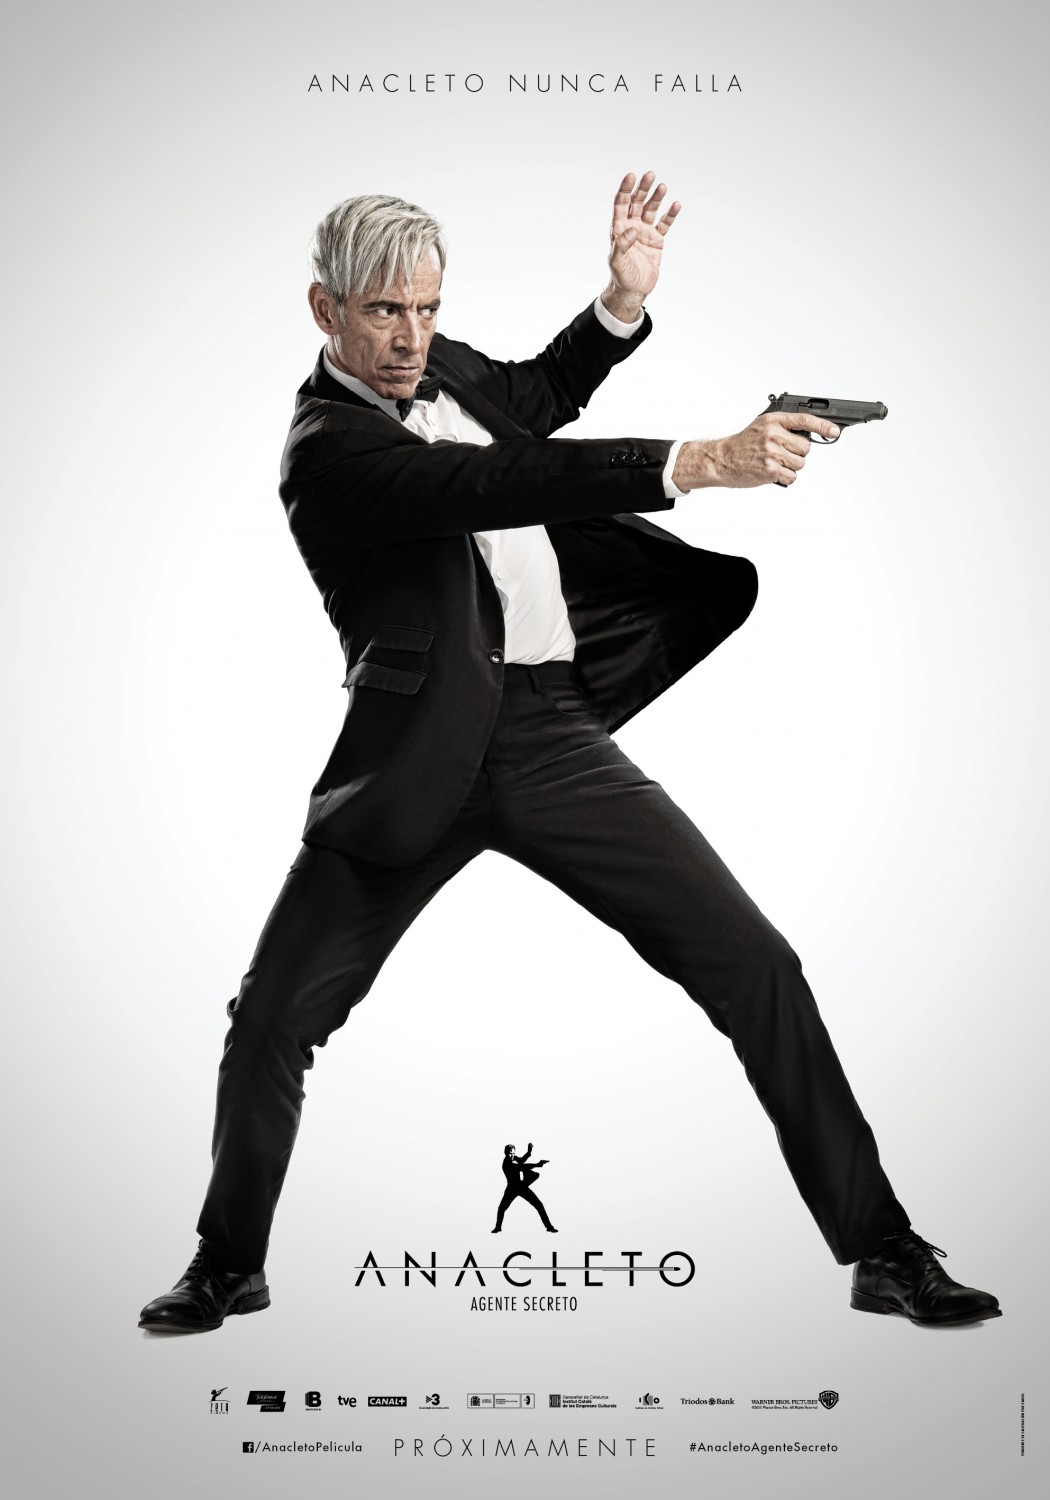 Extra Large Movie Poster Image for Anacleto: Agente secreto (#1 of 3)